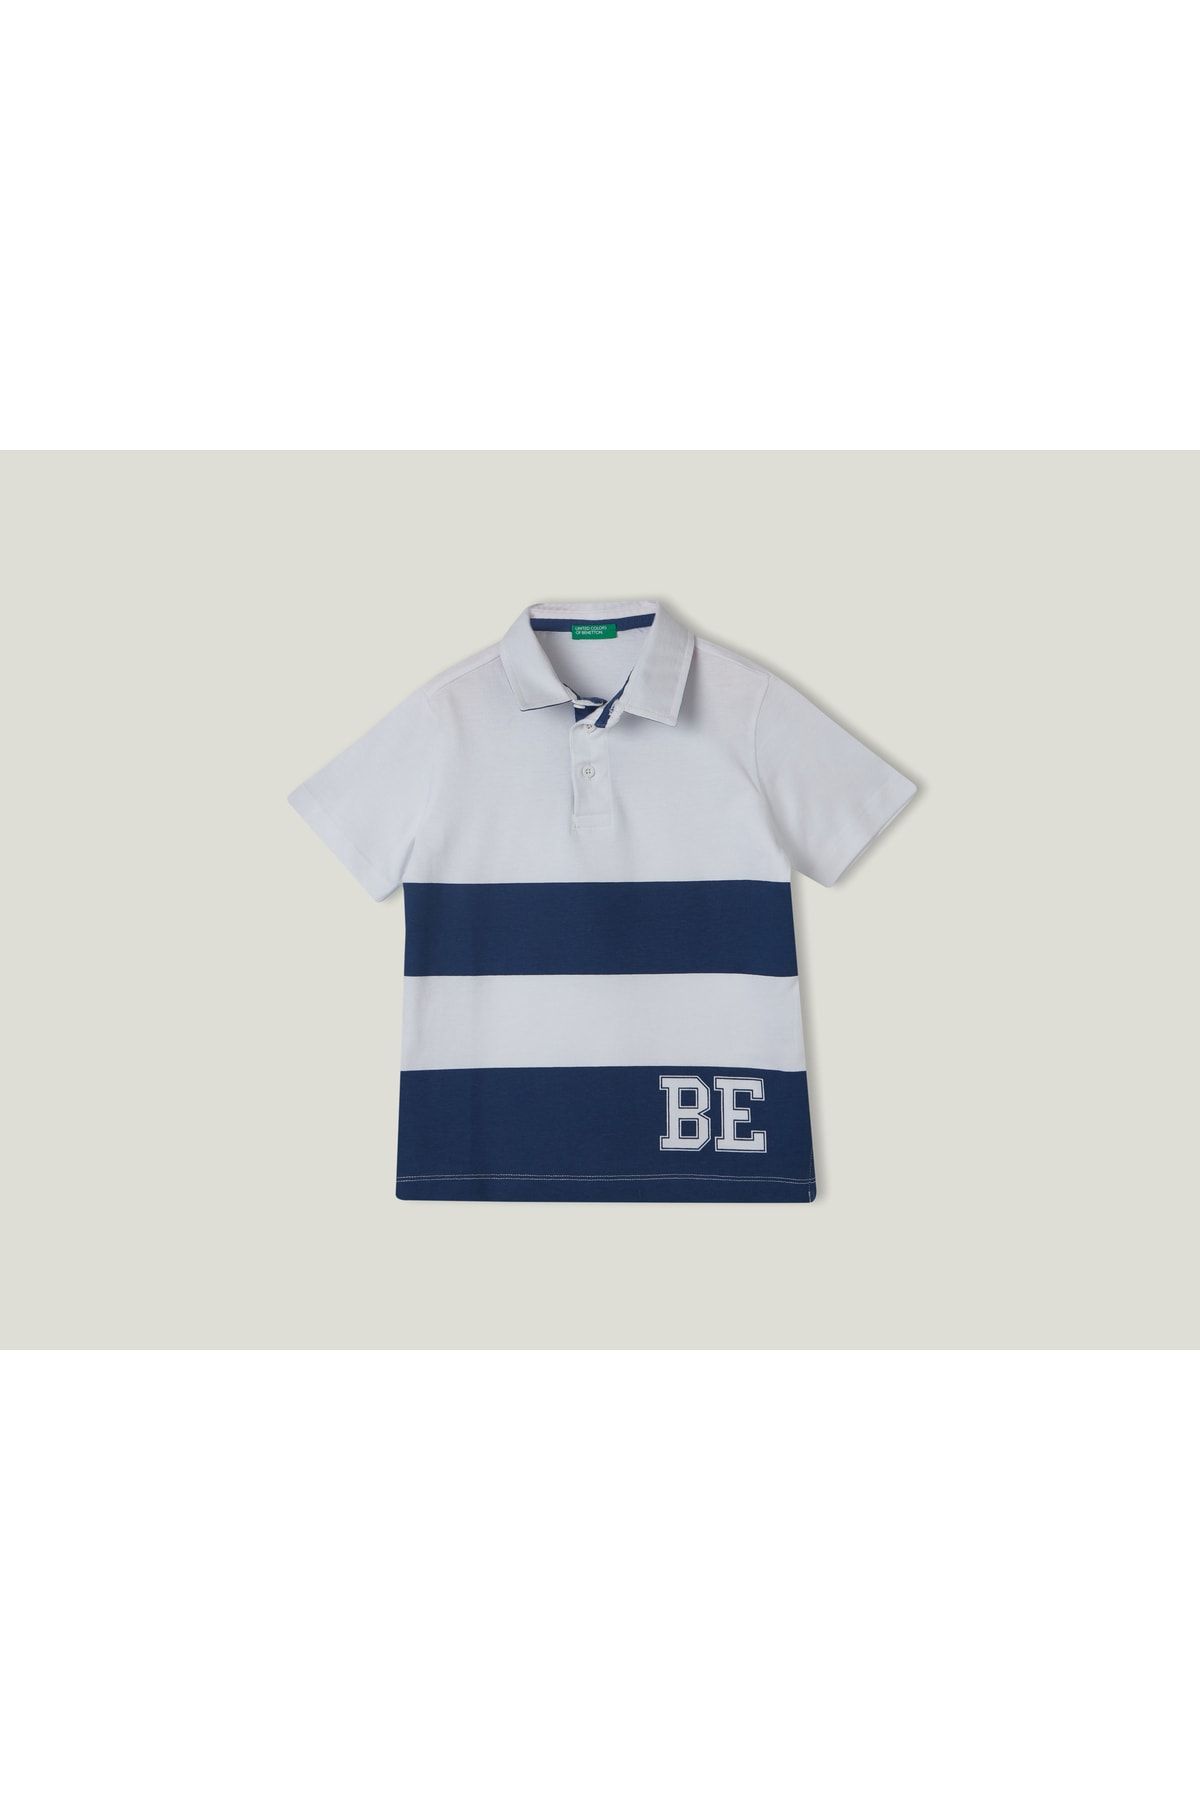 United Colors of Benetton Erkek Çocuk Beyaz Şerit Detaylı Polo T-Shirt Beyaz Mix